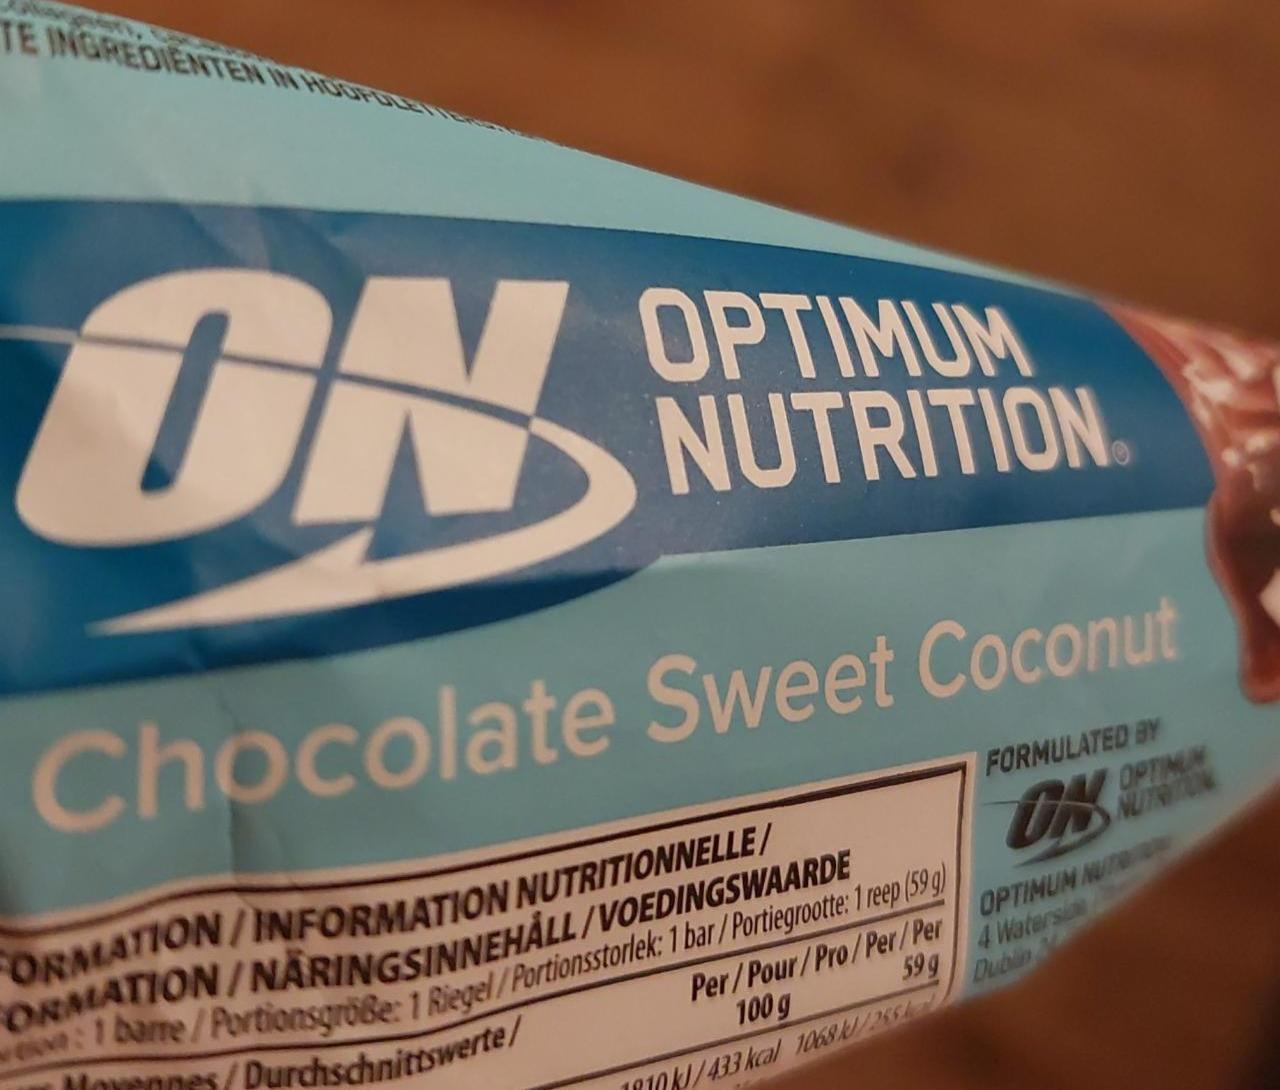 Fotografie - Chocolate Sweet Coconut Optimum Nutrition